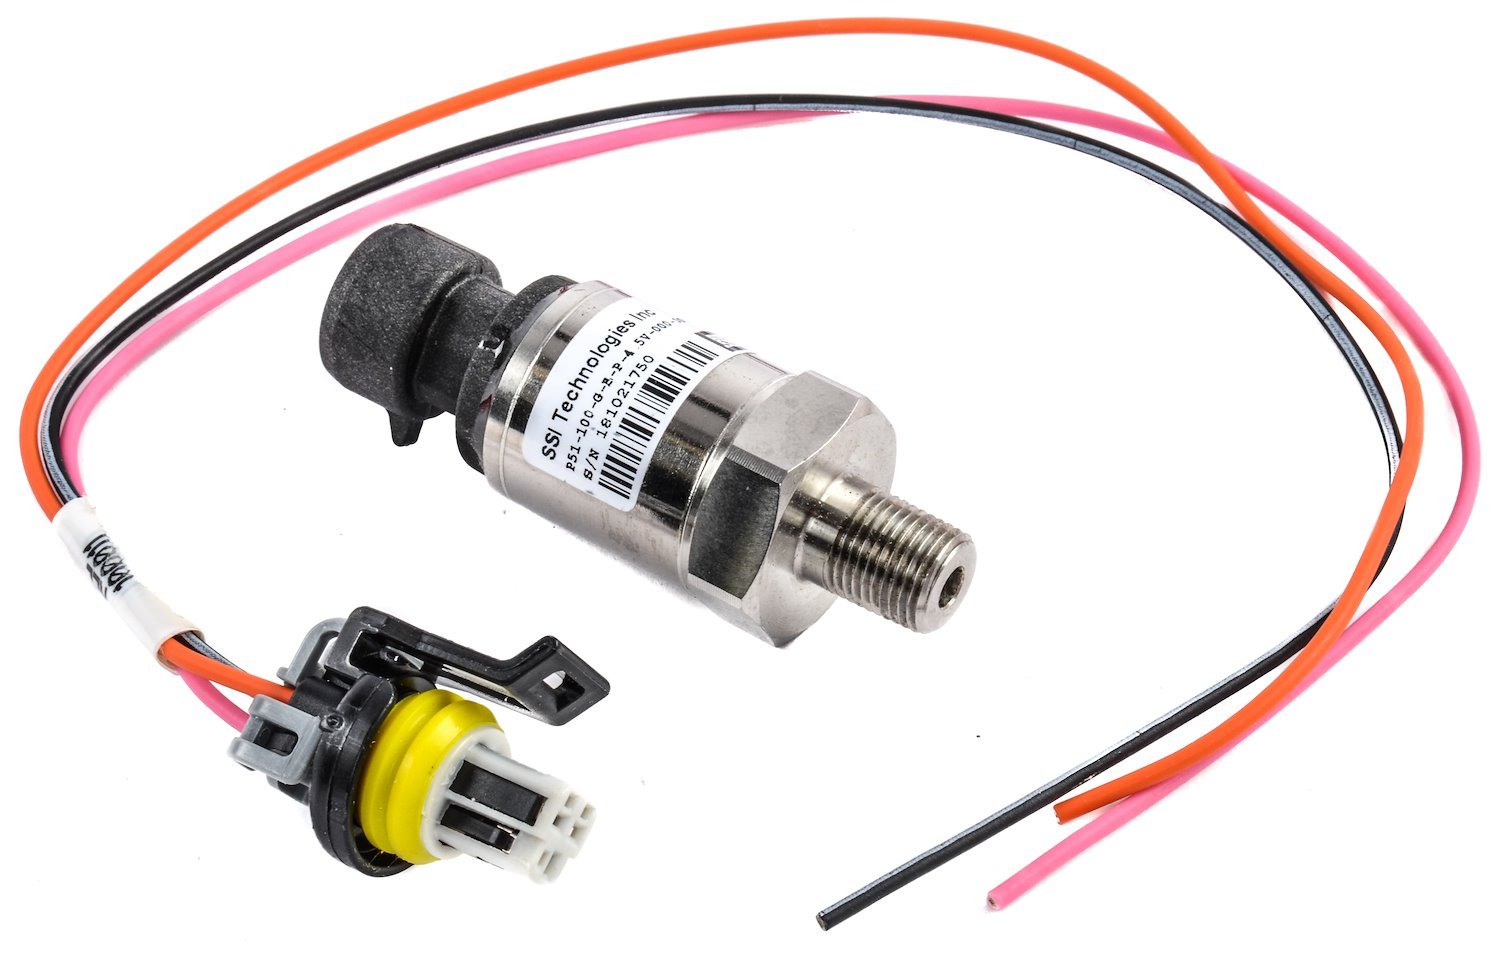 554-102 Stainless Pressure Sensor [100 psi]